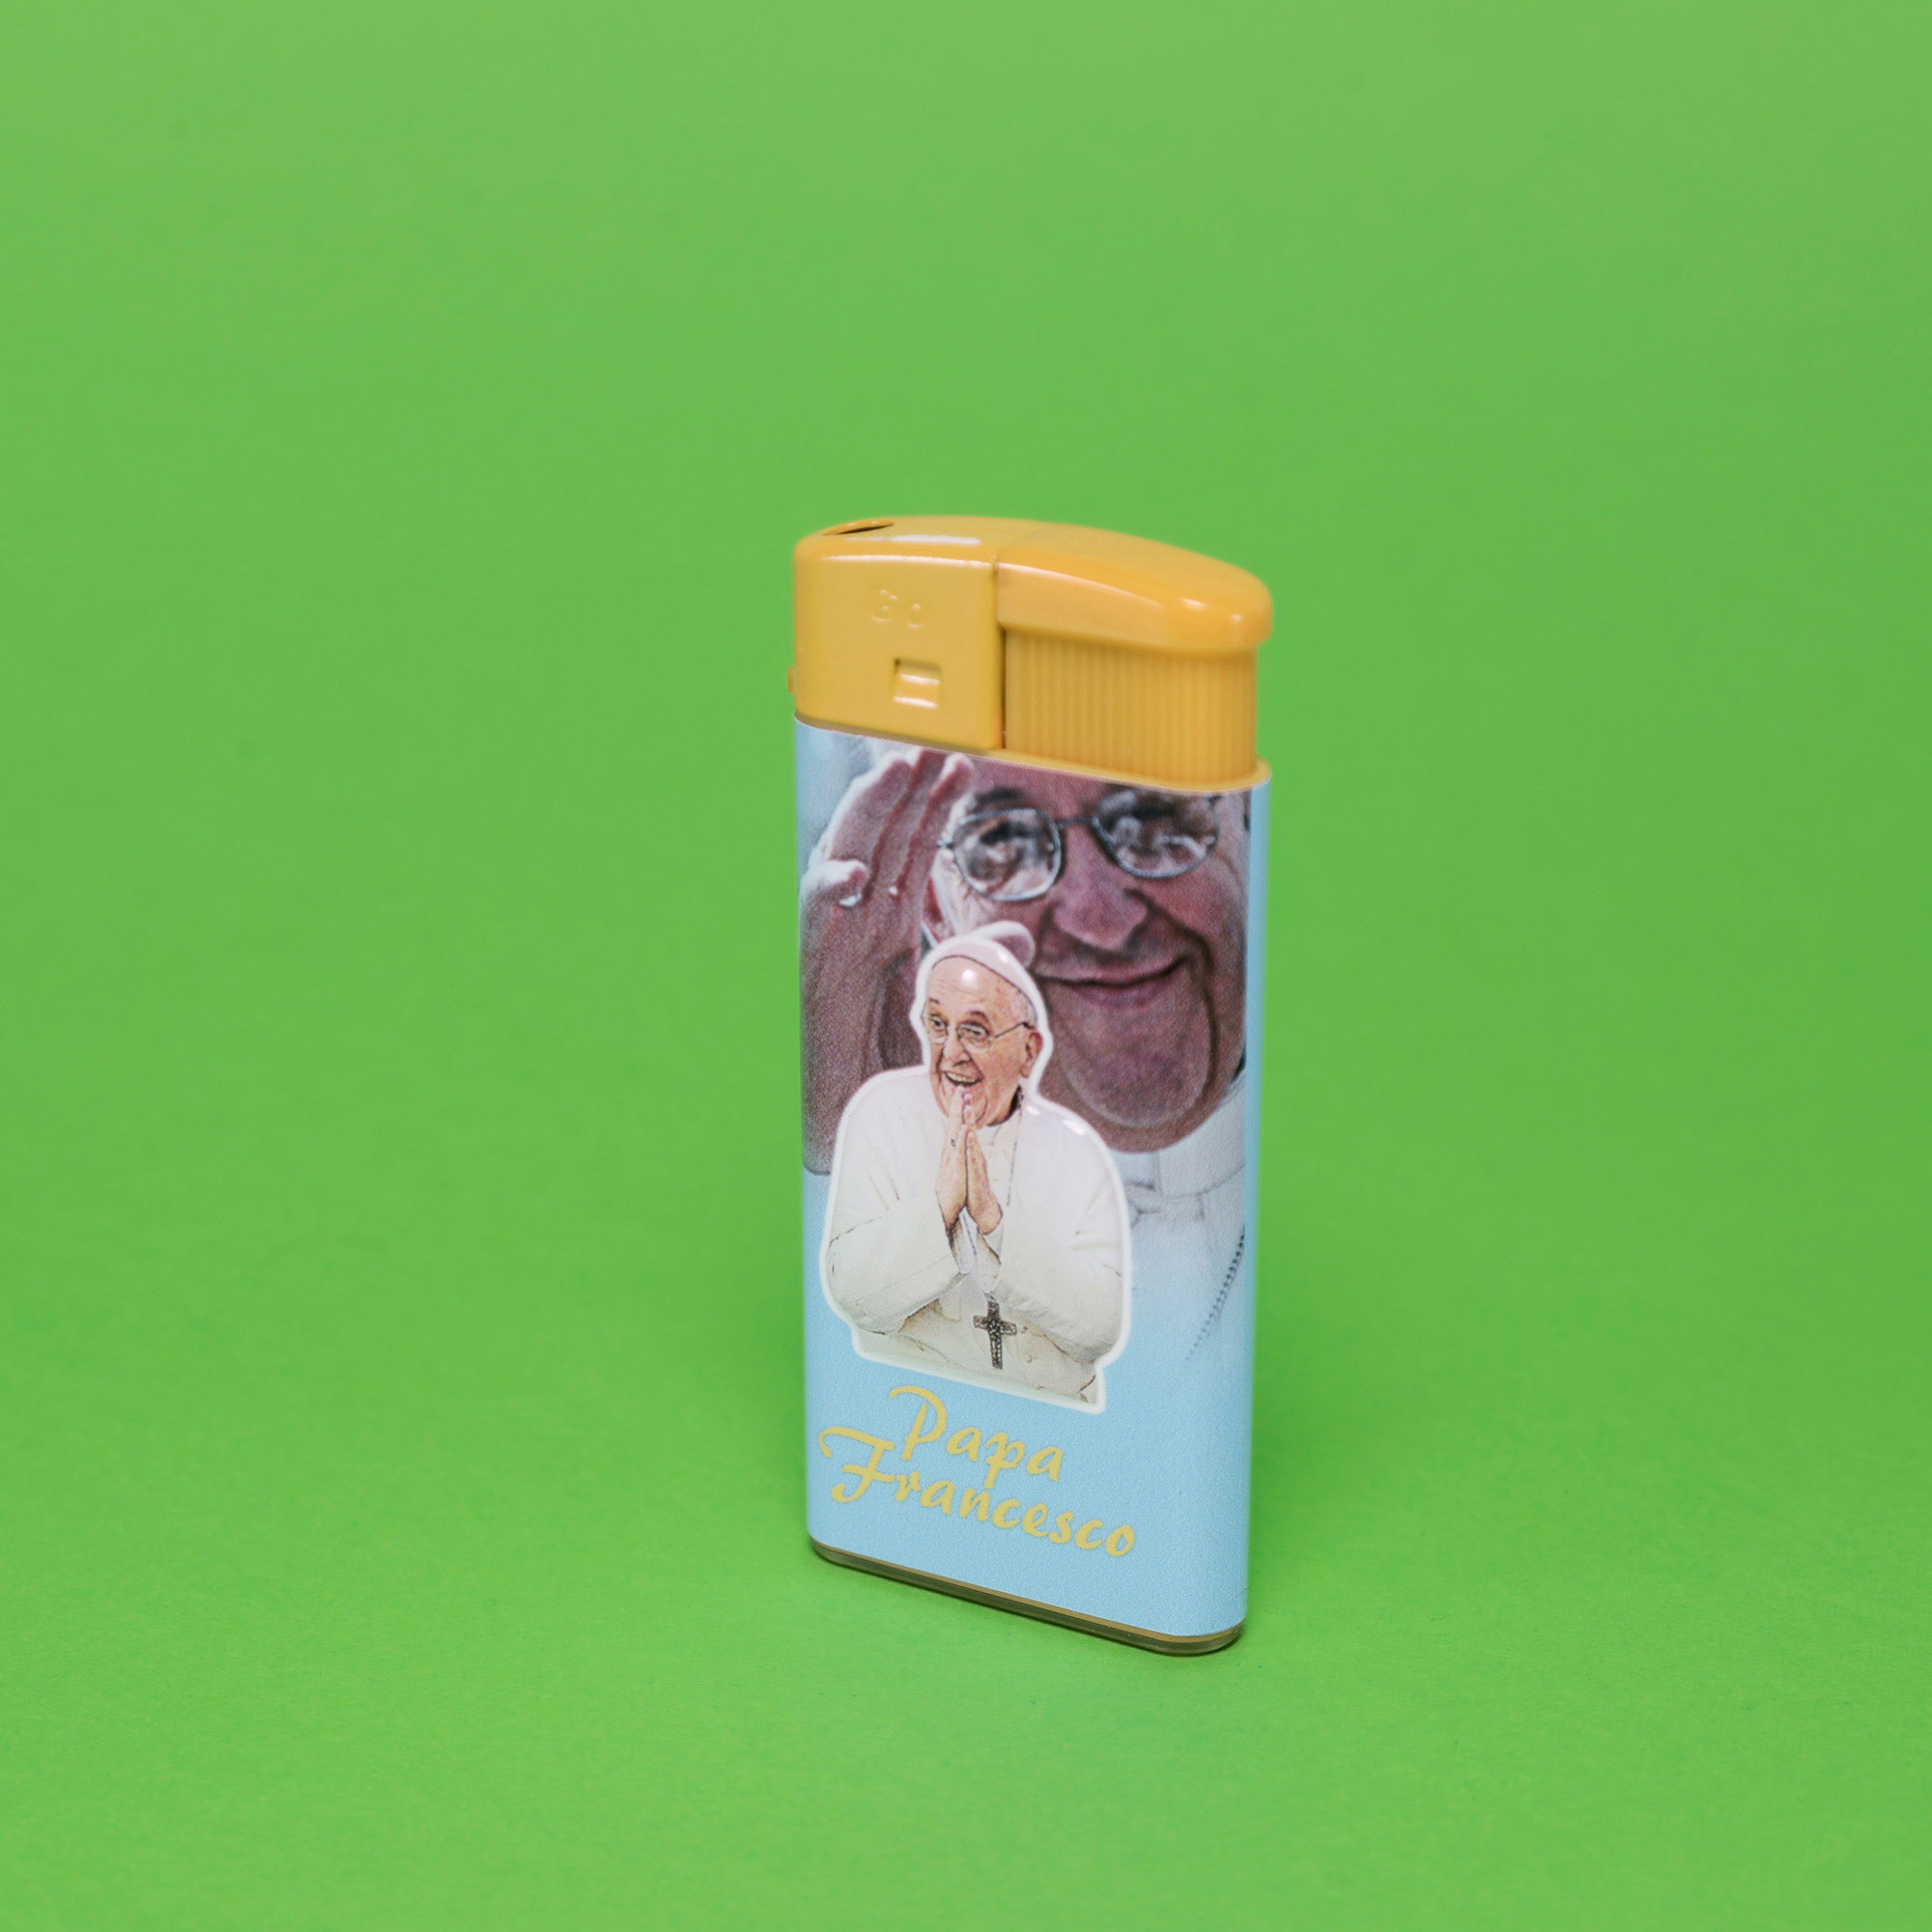 Pope Francis's lighter.

Prix : 2 €